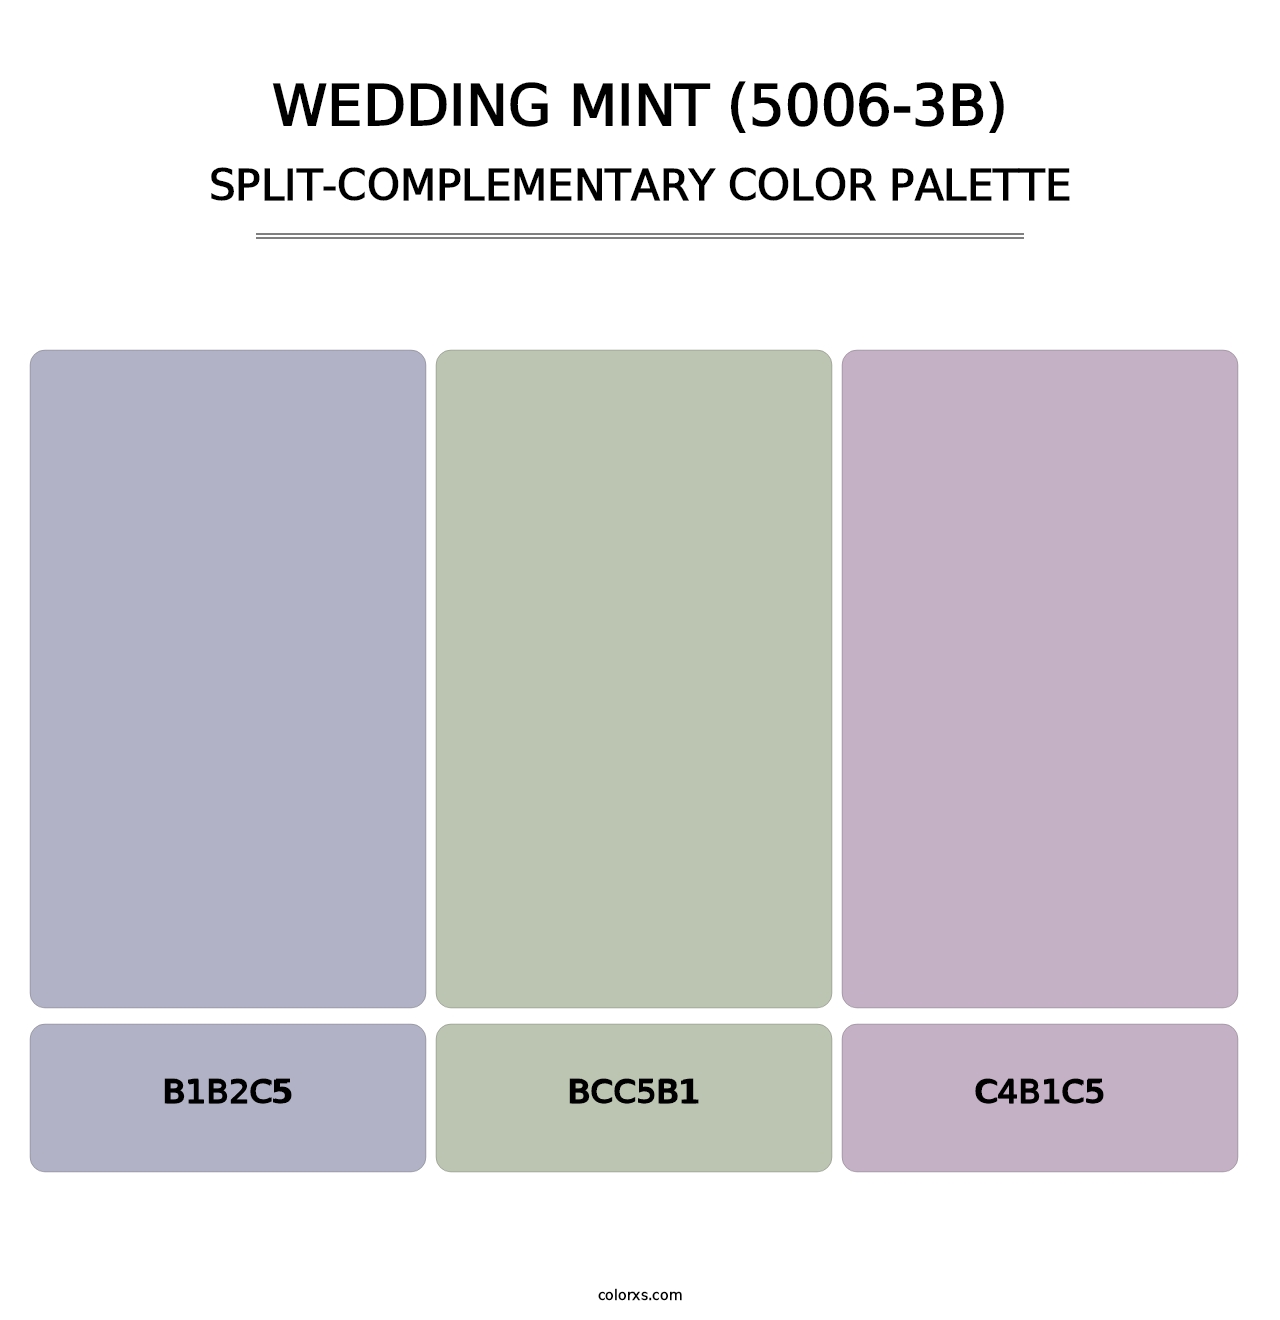 Wedding Mint (5006-3B) - Split-Complementary Color Palette